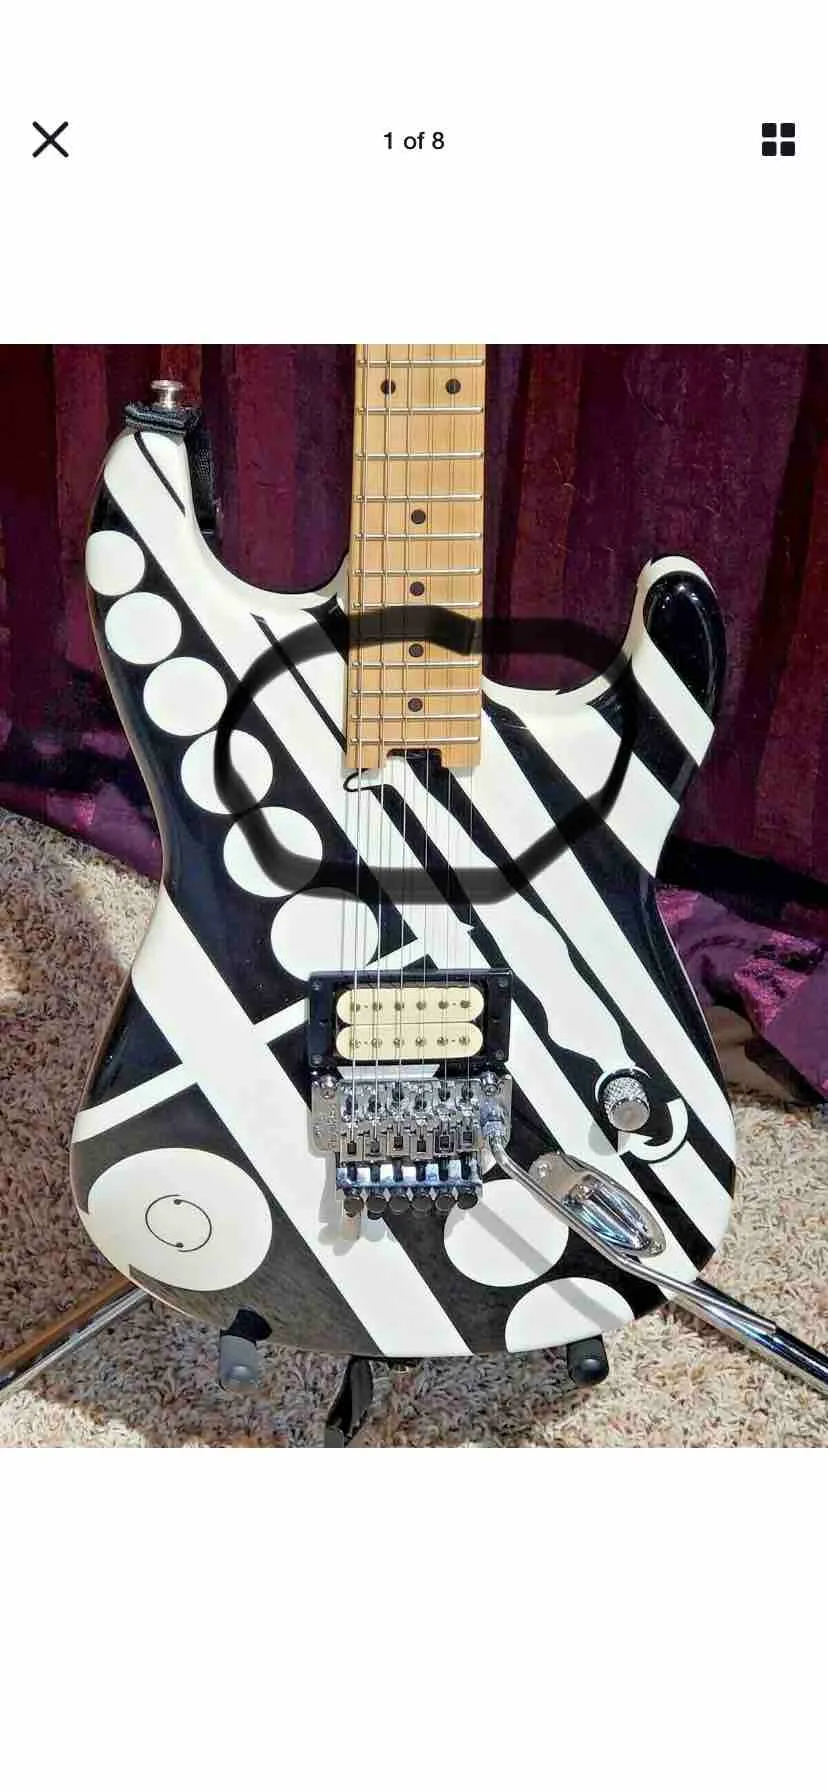 1978 Eddie Van Halen desencadeia guitarra círculos ver ya mais tarde bye preto colheita branco irônico guitarra elétrica floyd ponte rosa, coli toque no tone knos empurrar